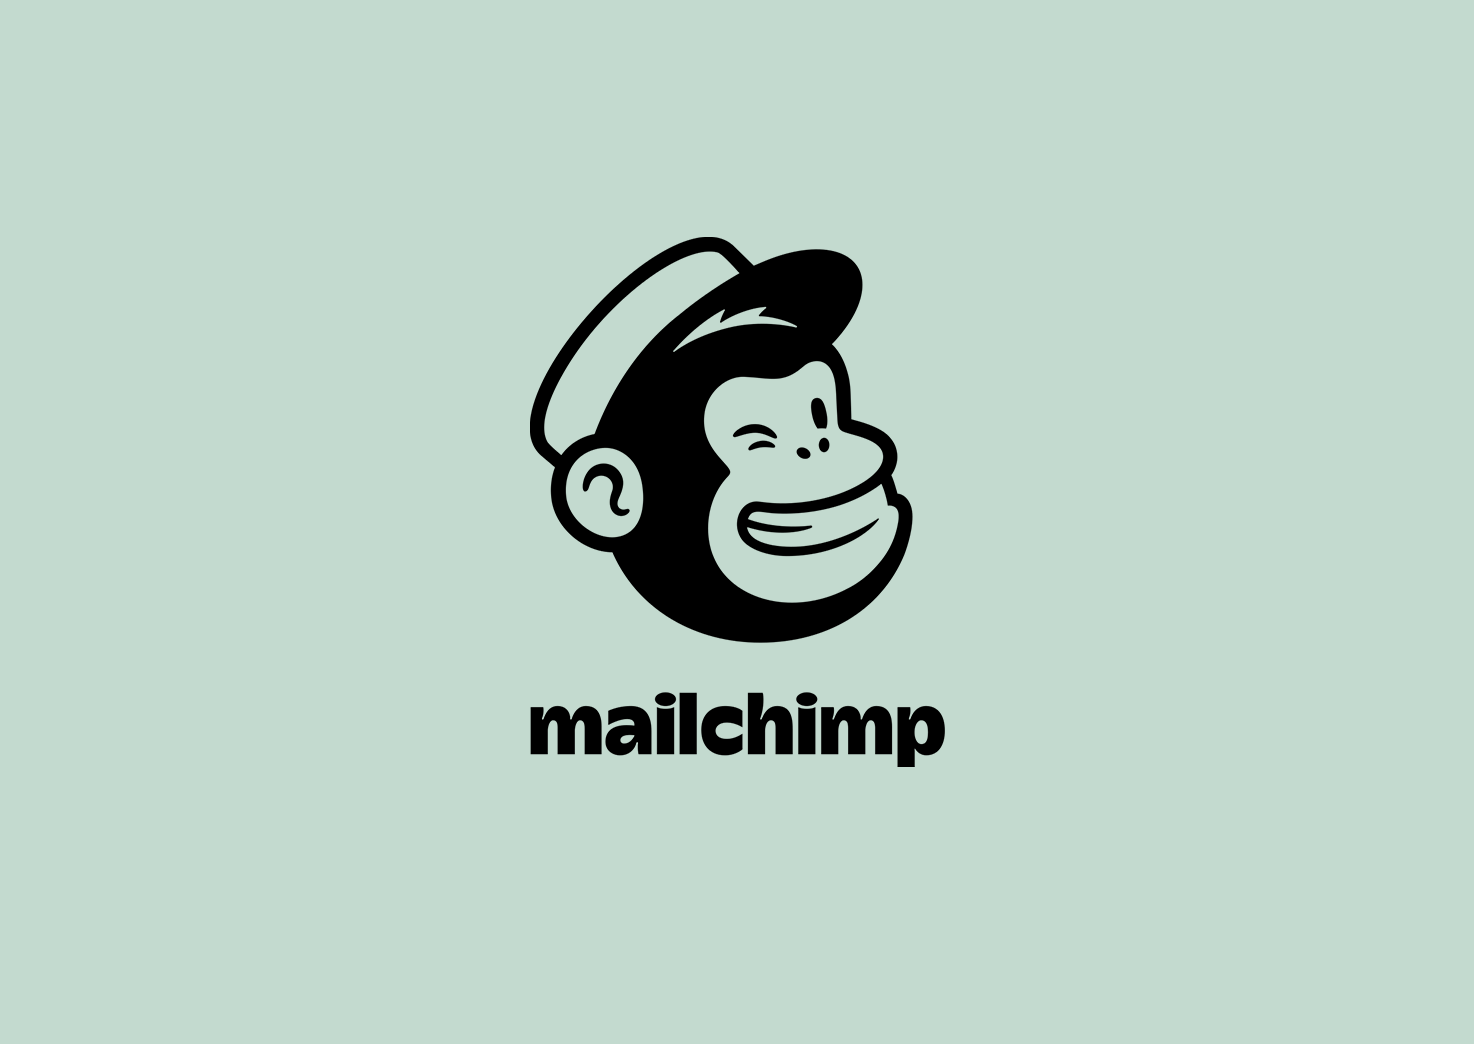 Image of the MailChimp logo